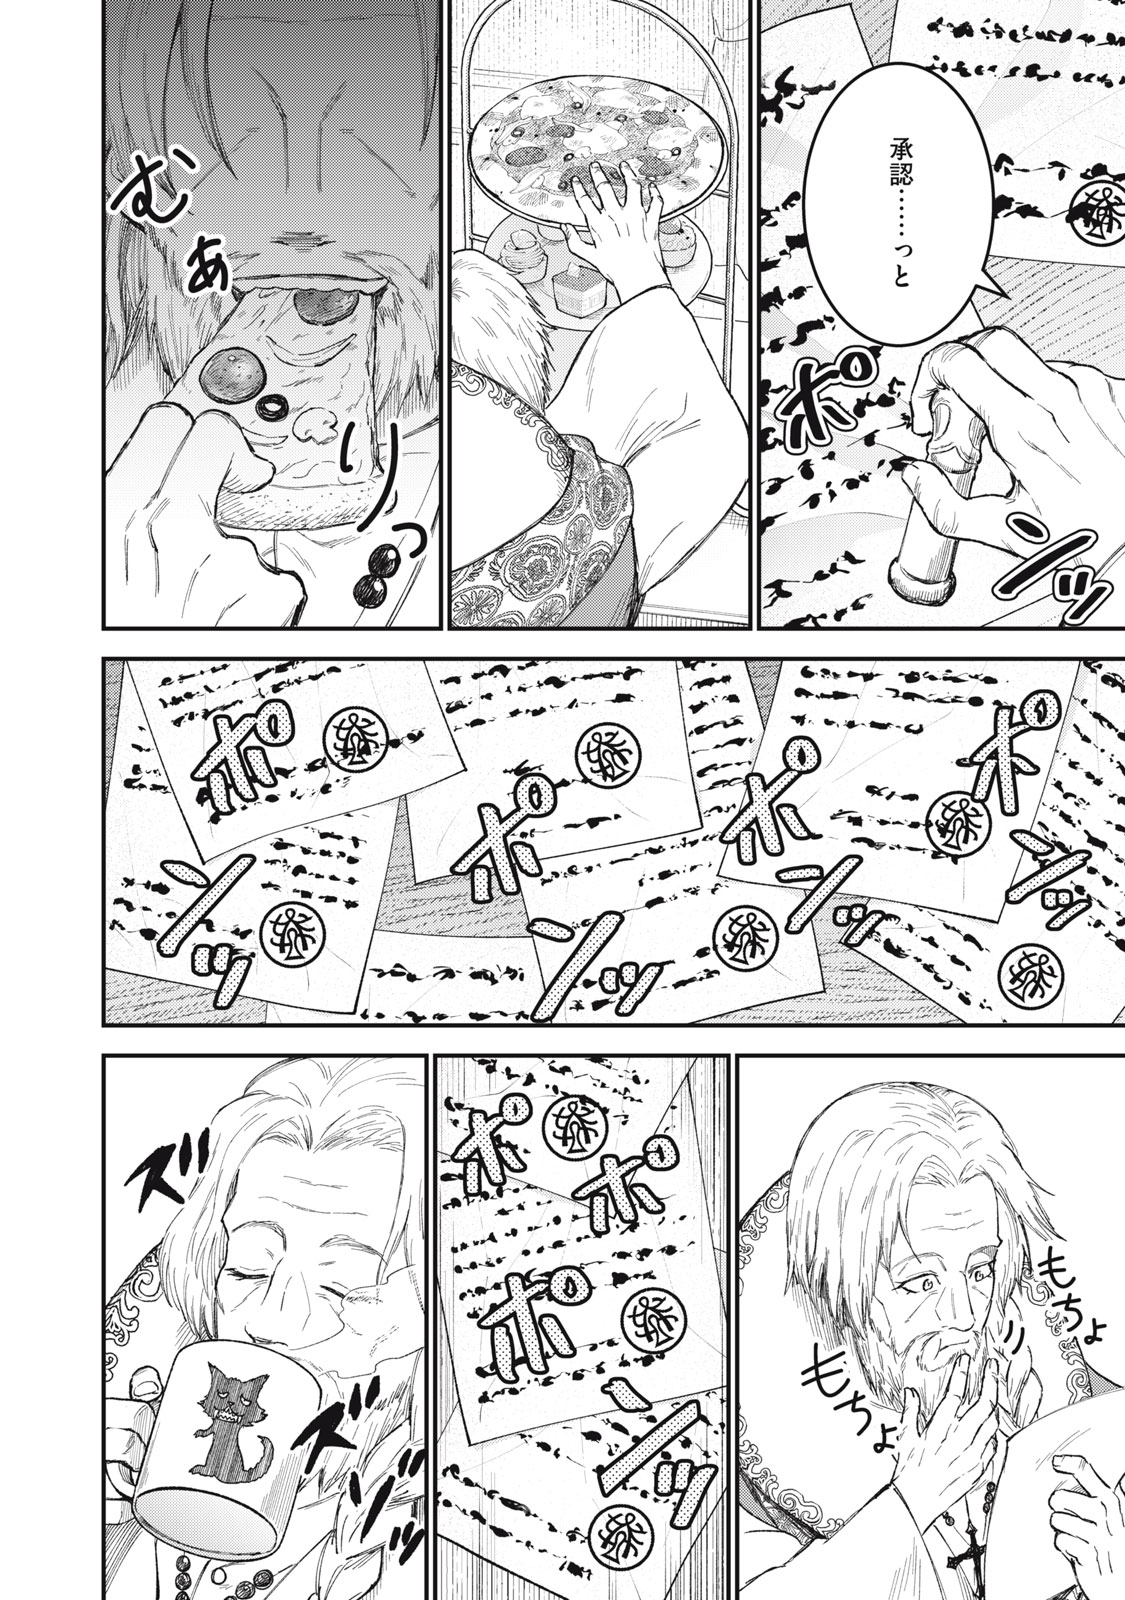 Itadaki no Lvitsa - Chapter 16.5 - Page 2